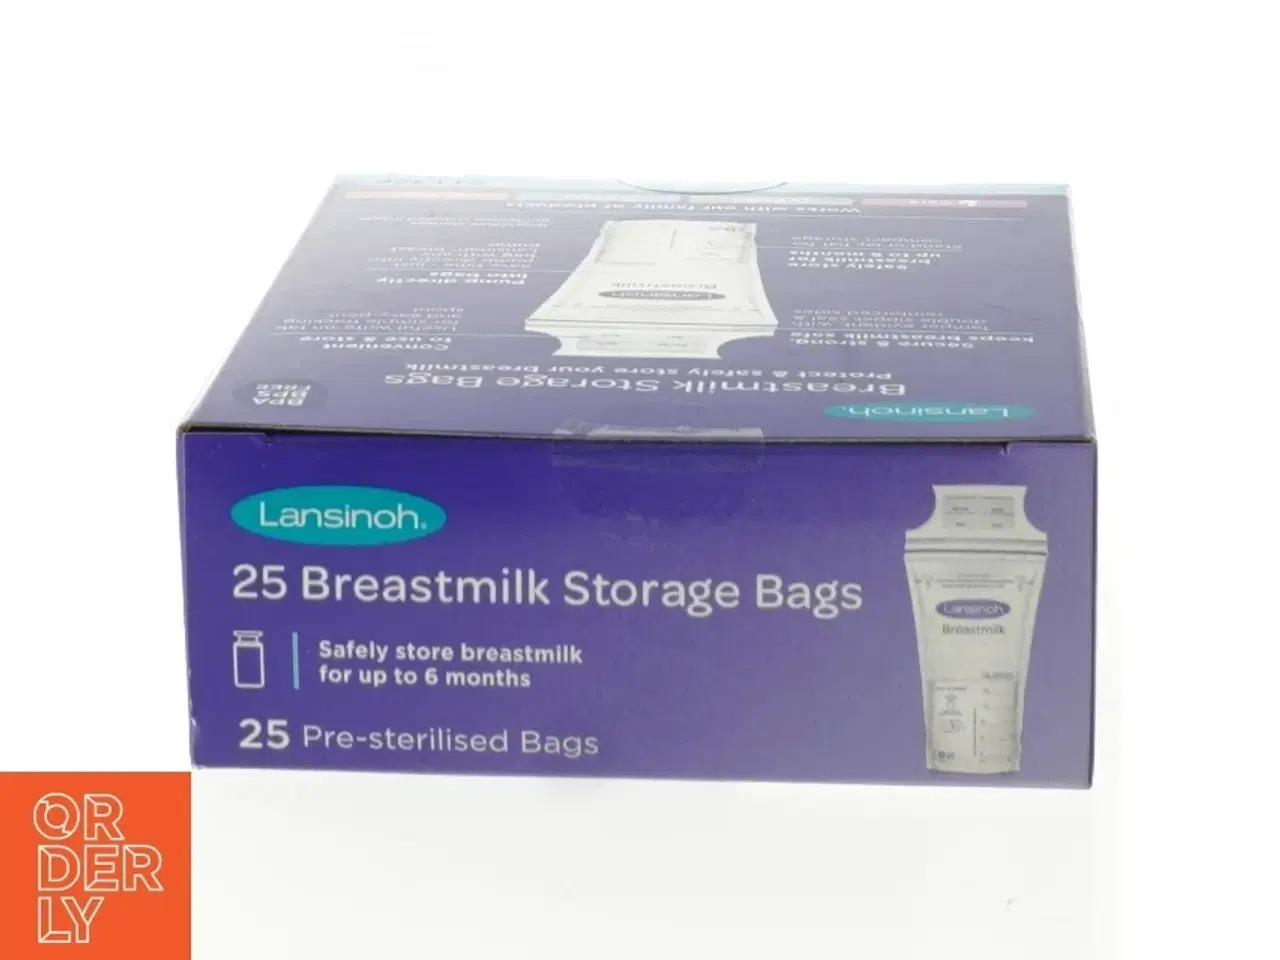 Billede 3 - Brystmælk opbevaringsposer fra Lansinoh (str. 11 x 13 cm)